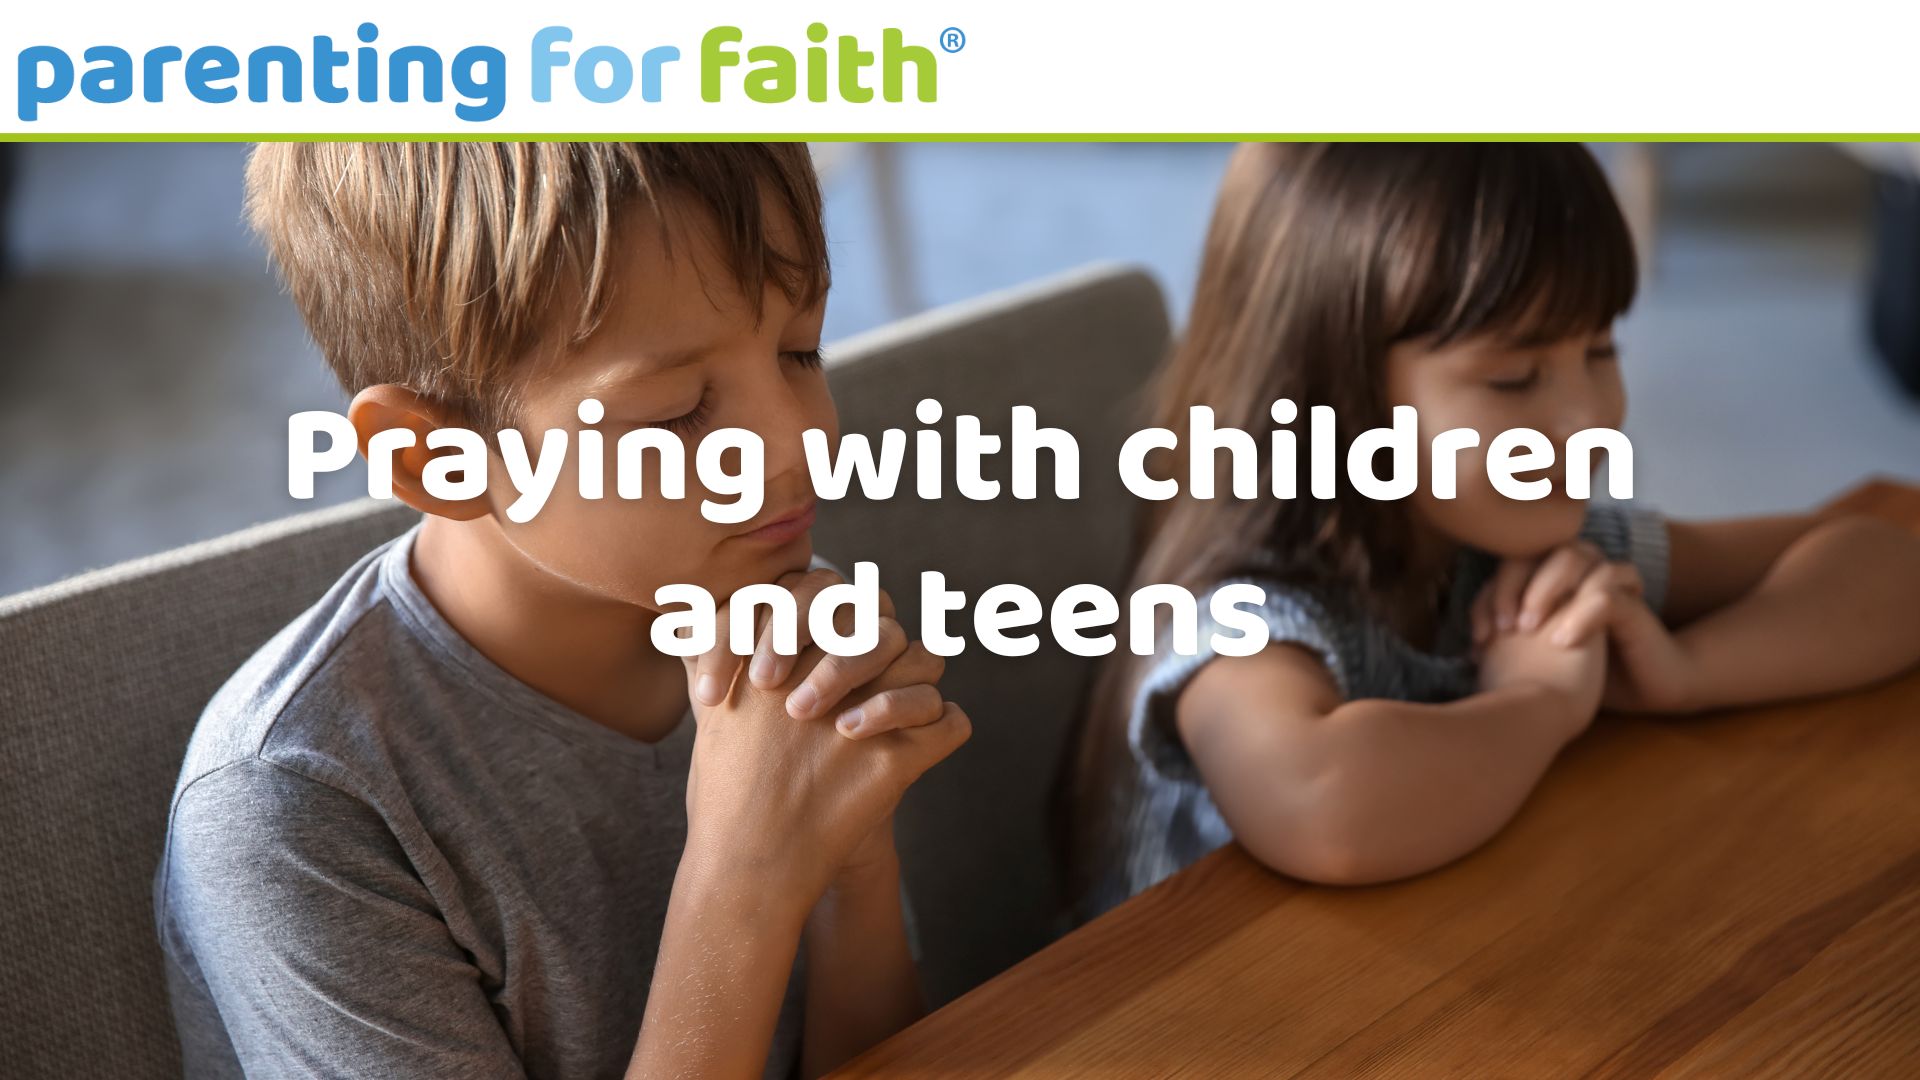 Praying with children and teens image credit pixelshot